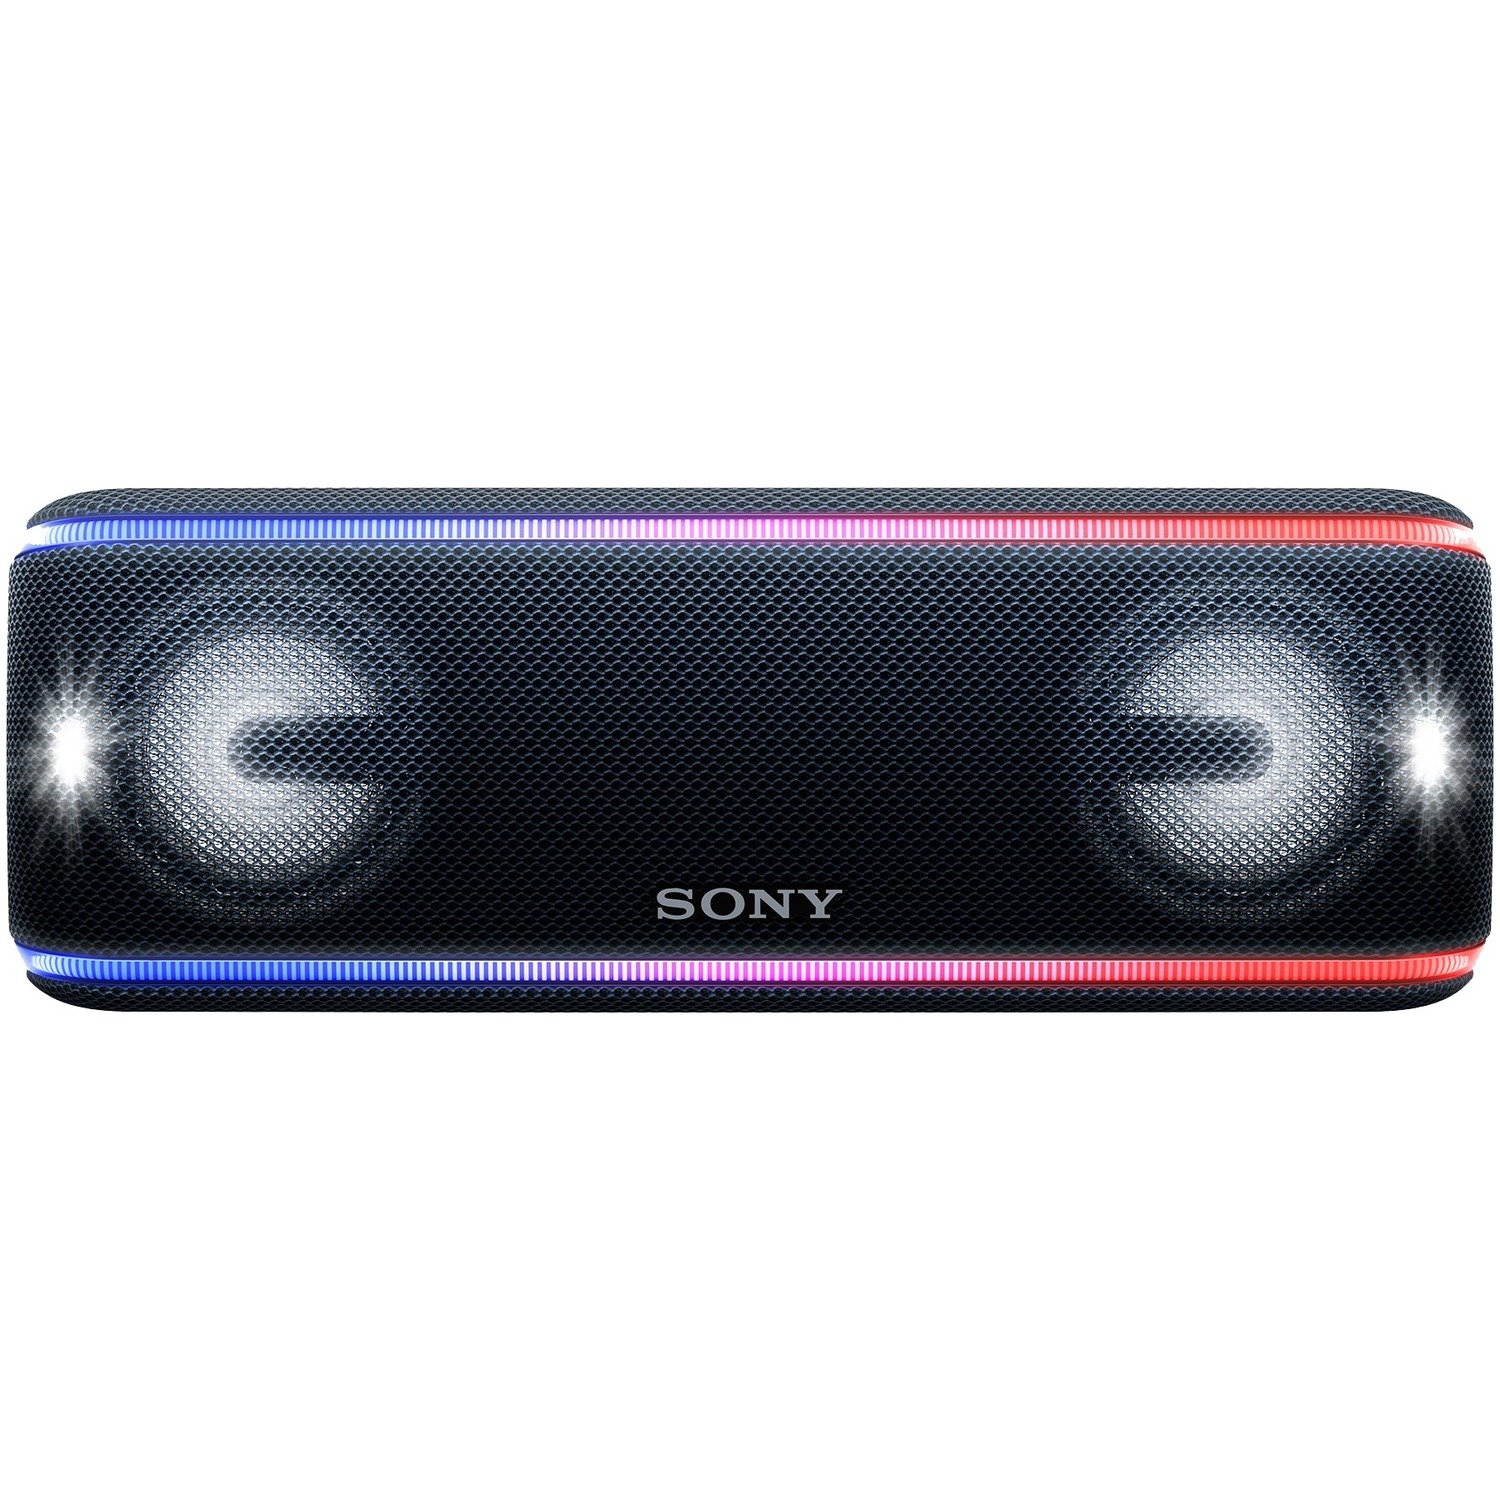 Sony SRS-XB41 Portable Bluetooth Speaker System - Black